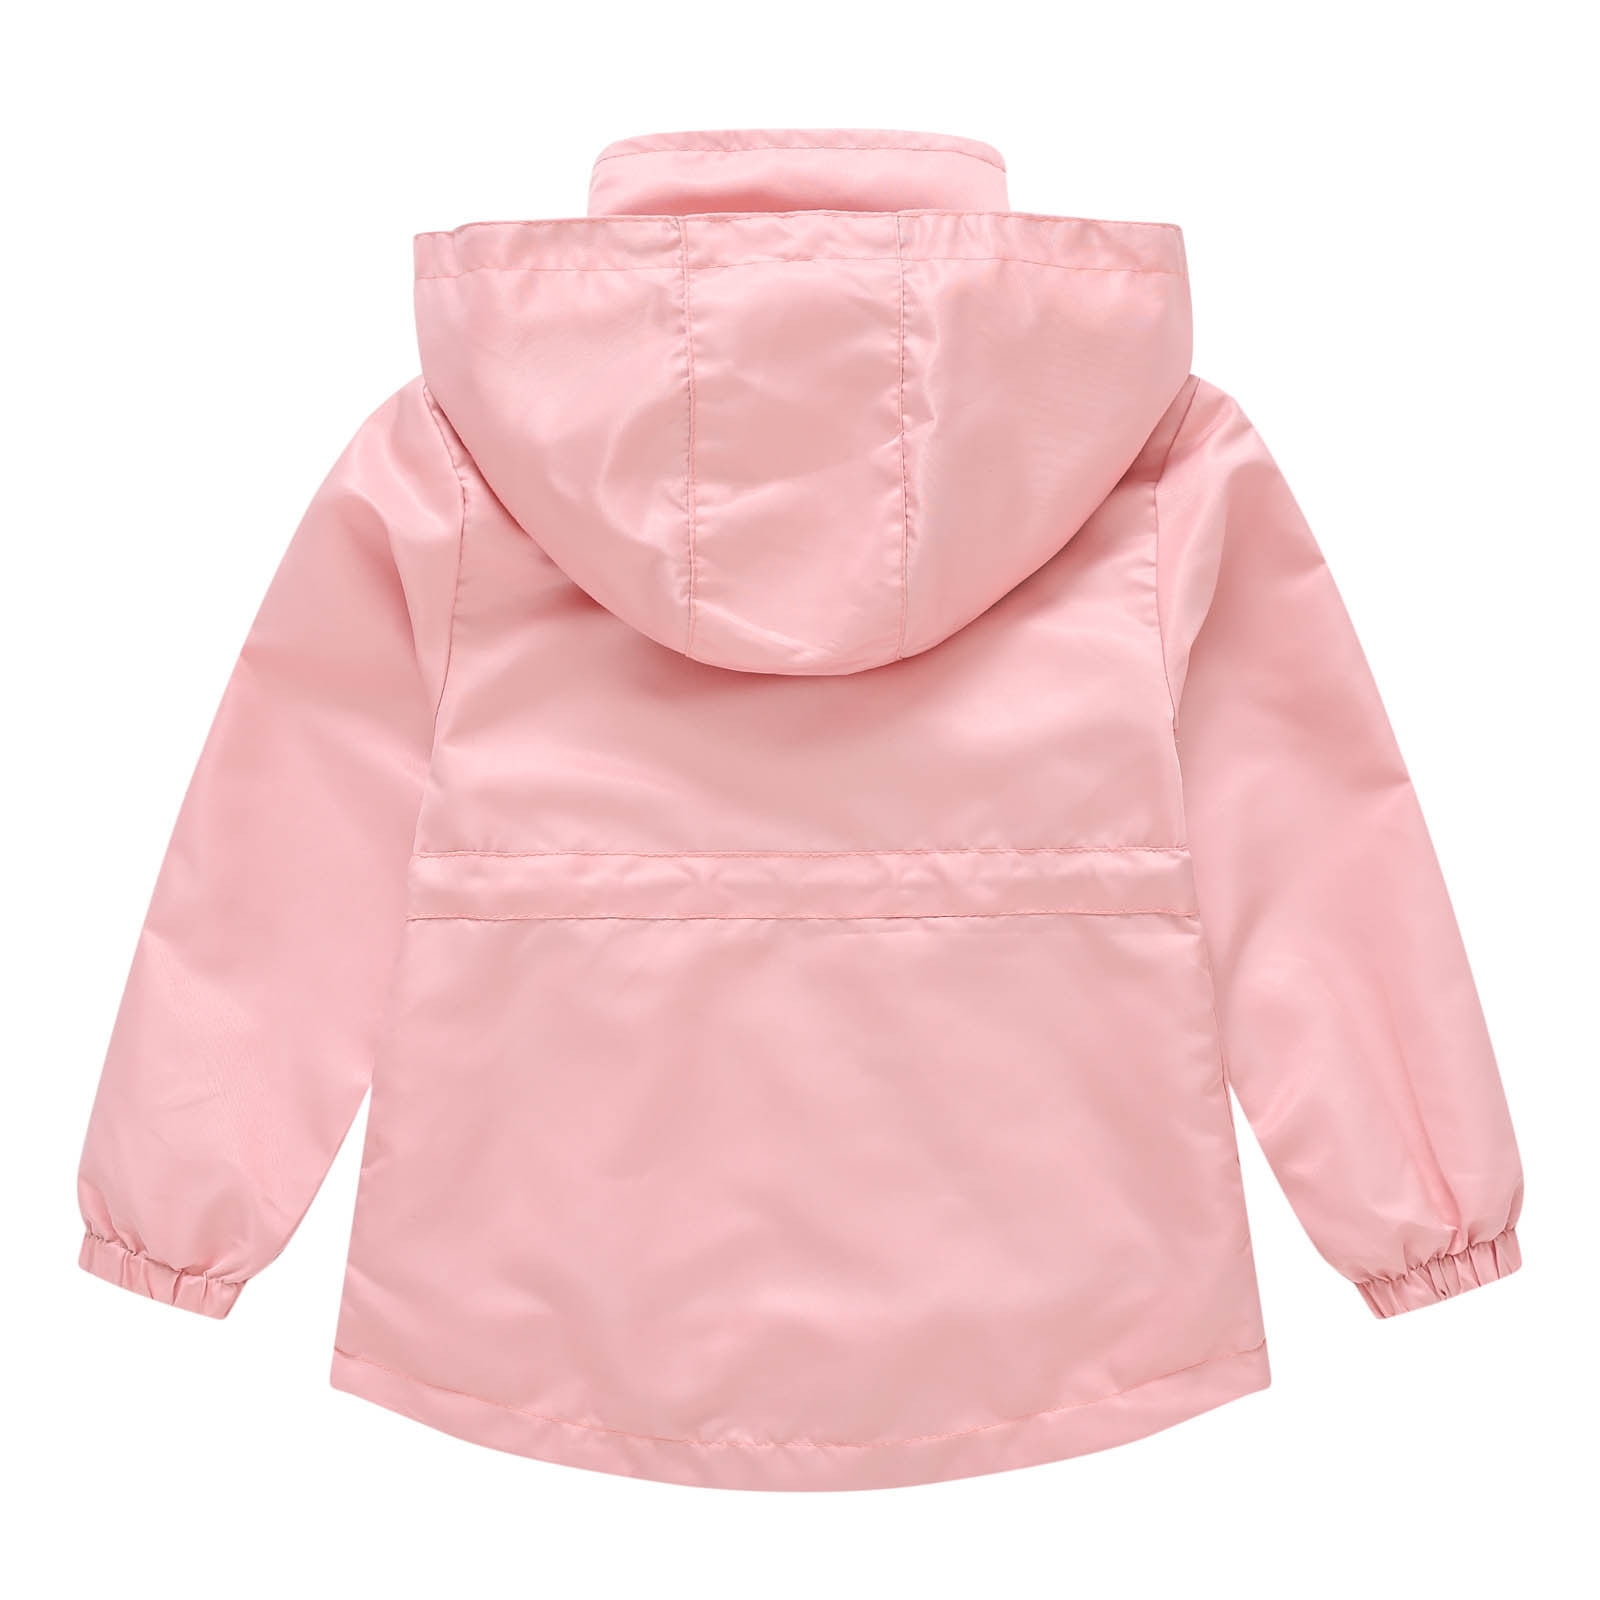 LEEy-world Baby Girls' Clothing Mid Girls Toddler Kids Coat Trench Windbreaker Jacket Outwear Girls Coat&jacket,Pink - Walmart.com